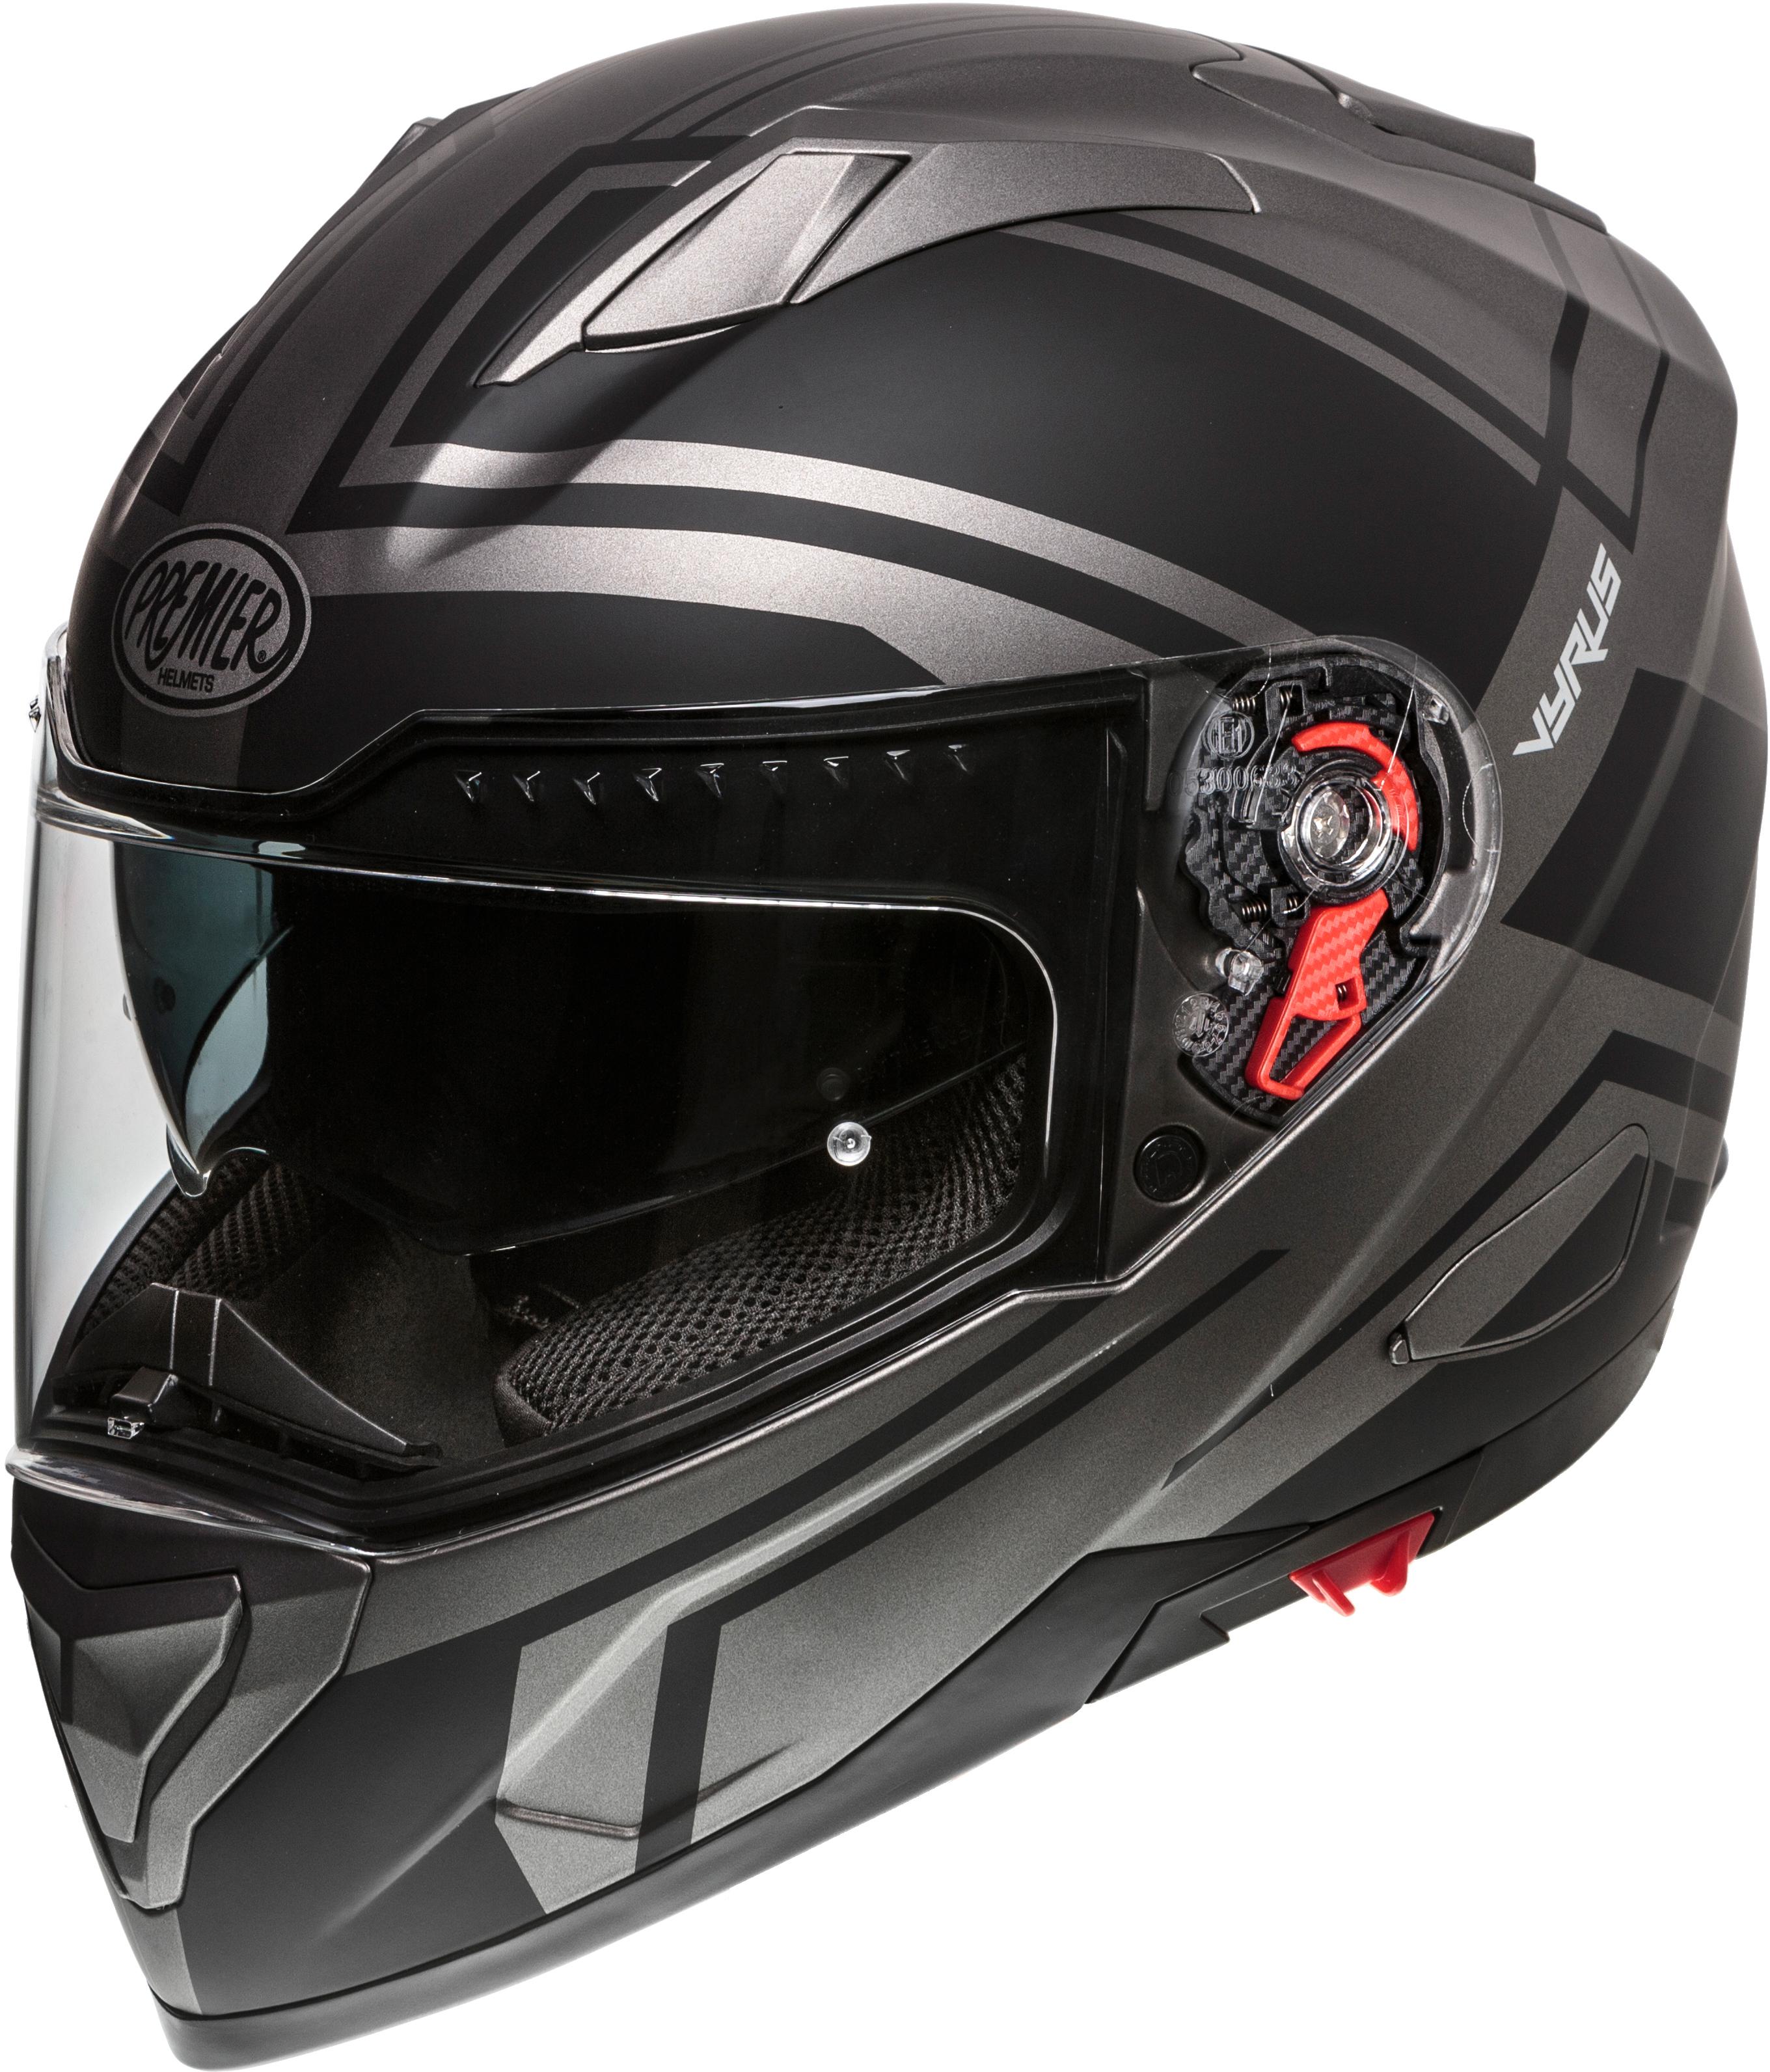 Premier Vyrus Helmet Black/Gun Matt - Large